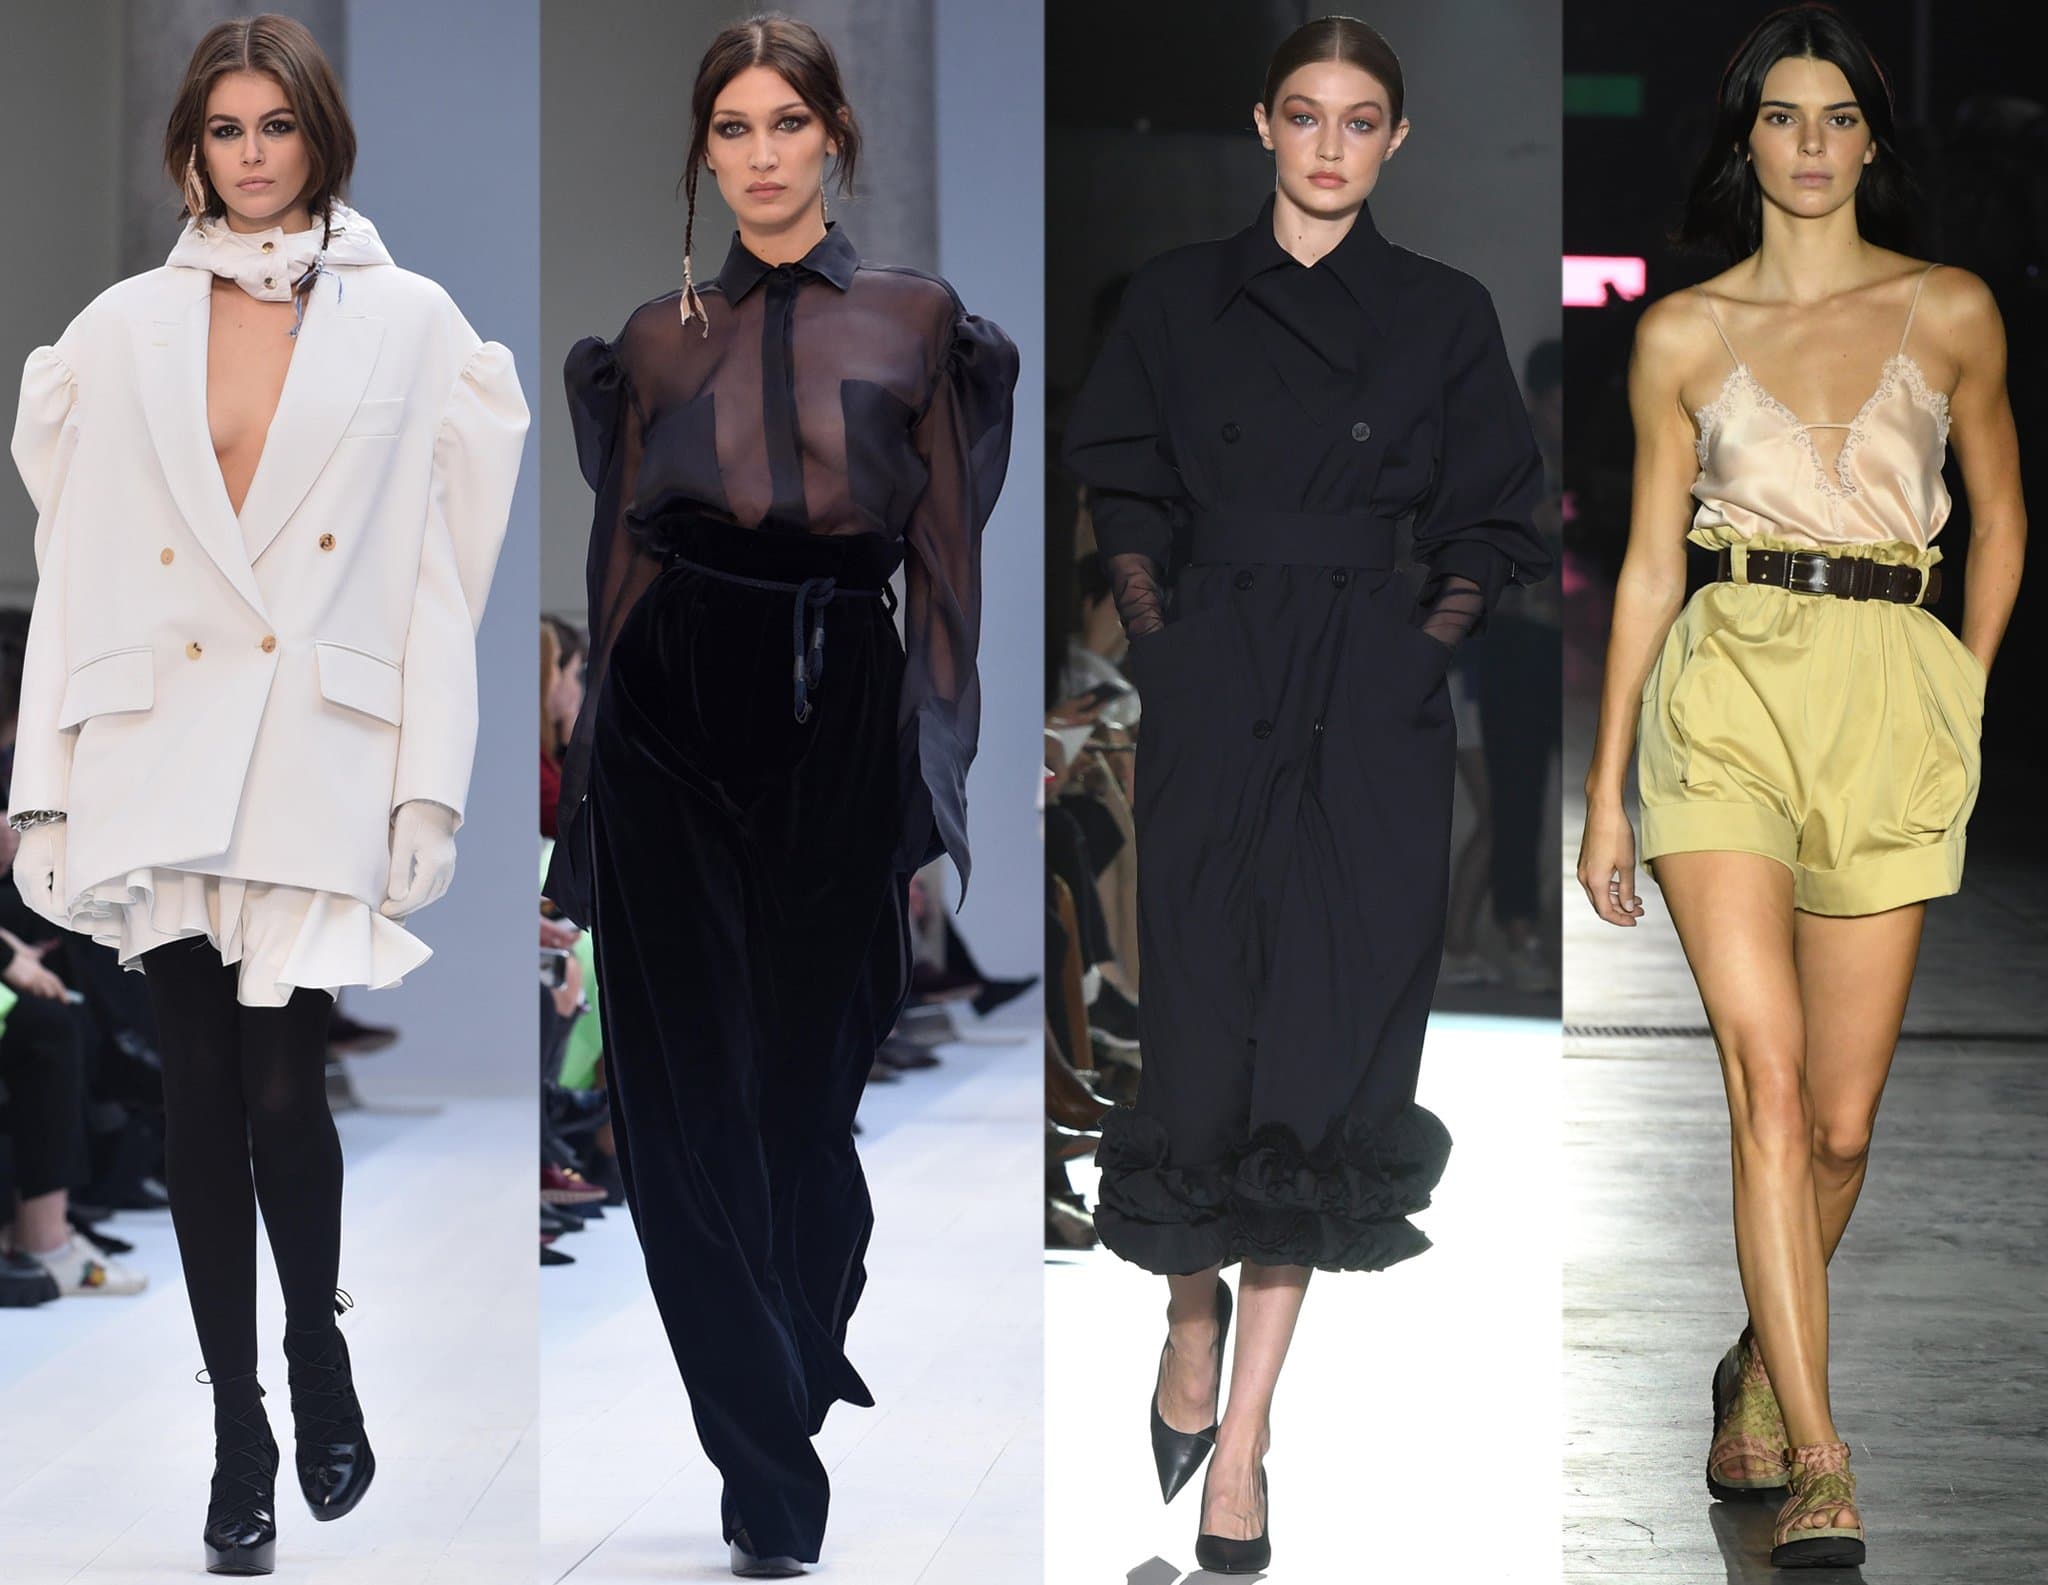 Kaia Gerber, Bella Hadid, Gigi Hadid, and Kendall Jenner on the runway during Milan Fashion Week